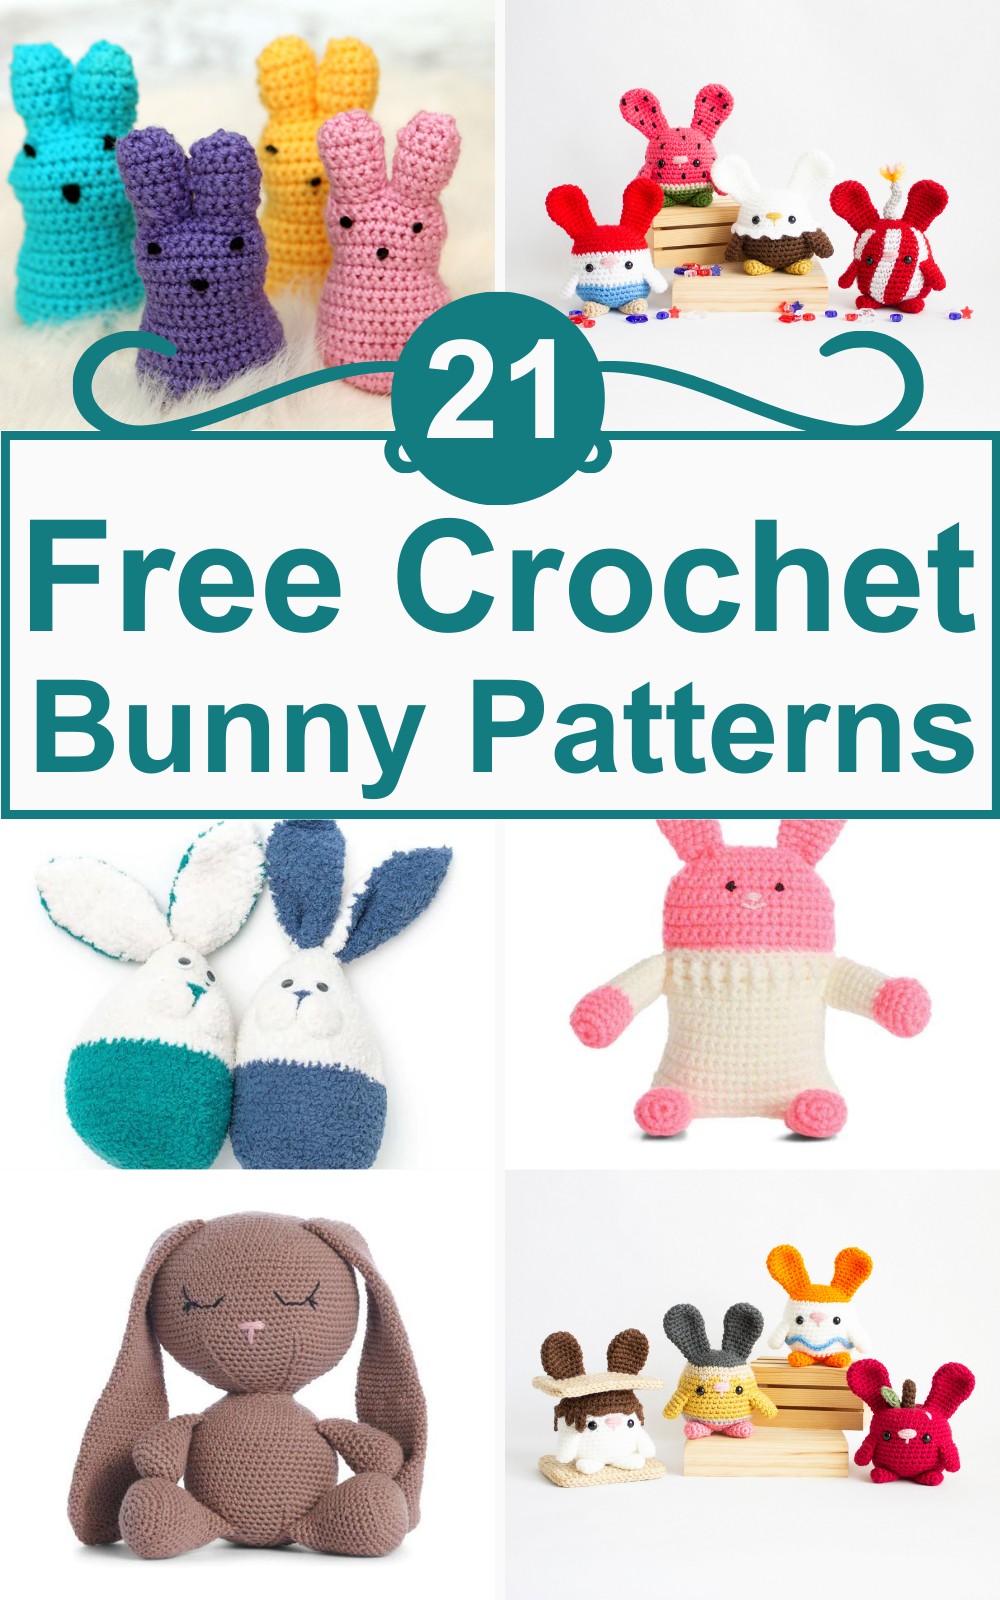 21 Free Crochet Bunny Patterns